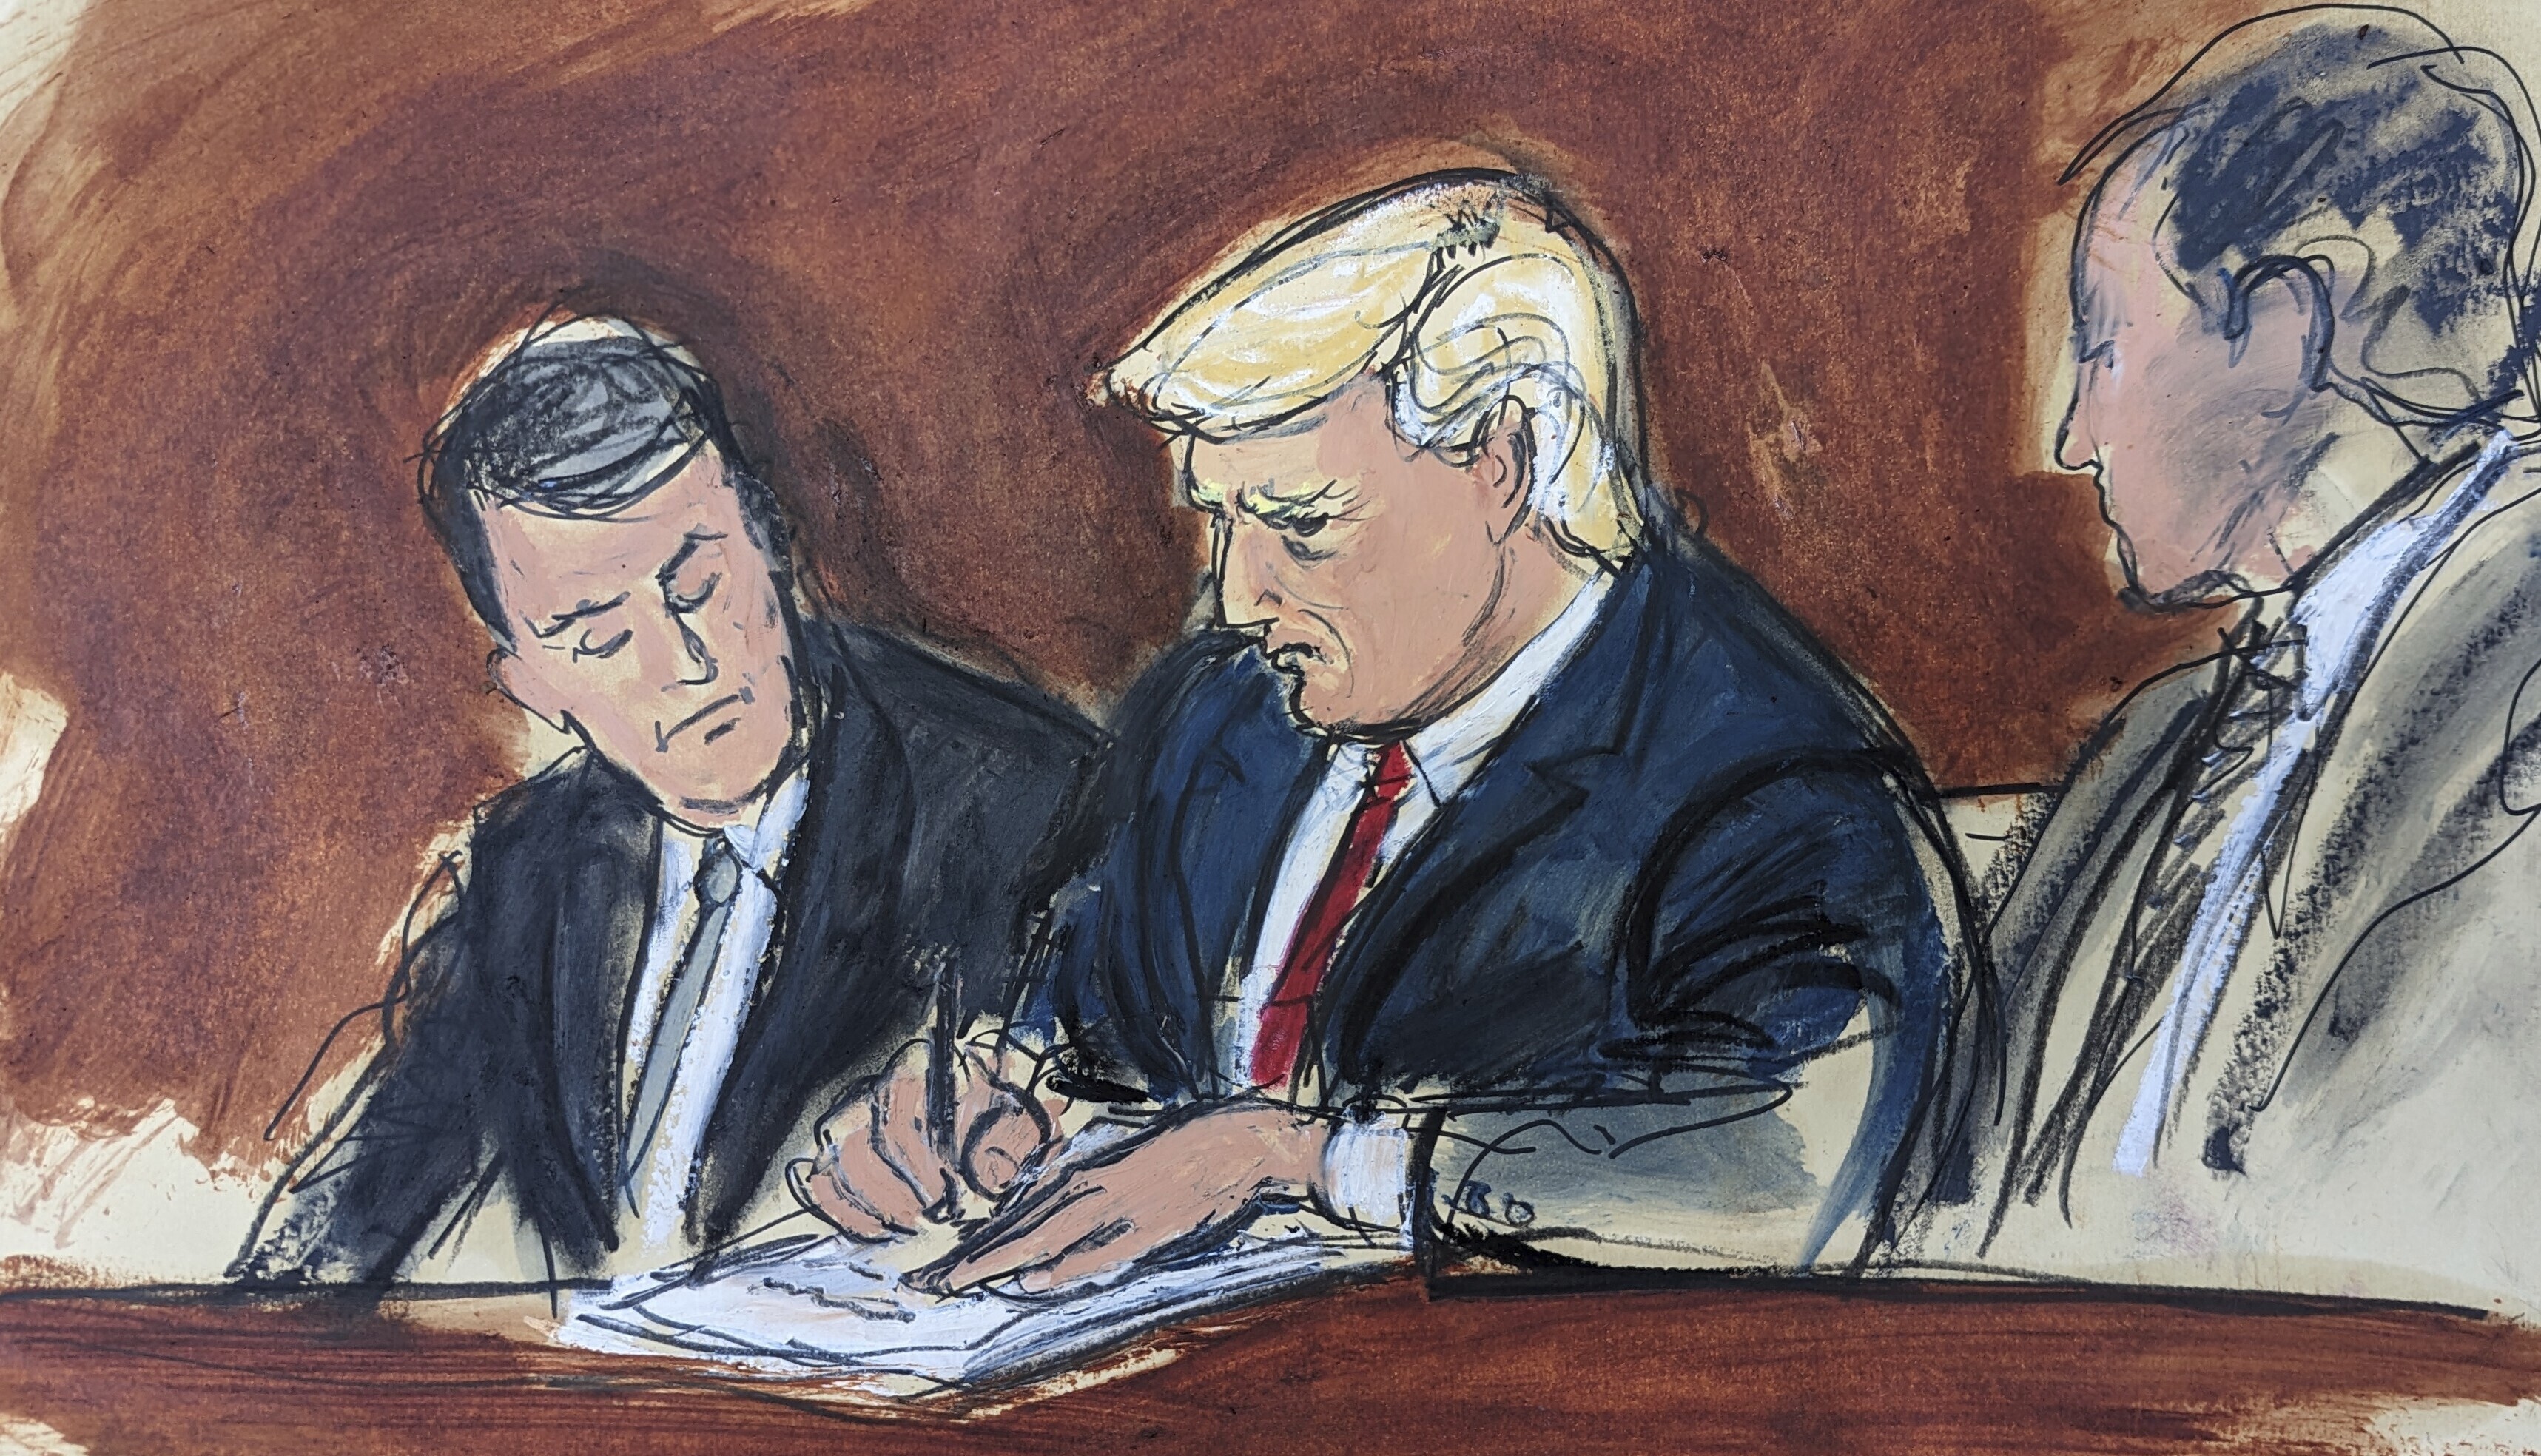 Donald Trump court sketch